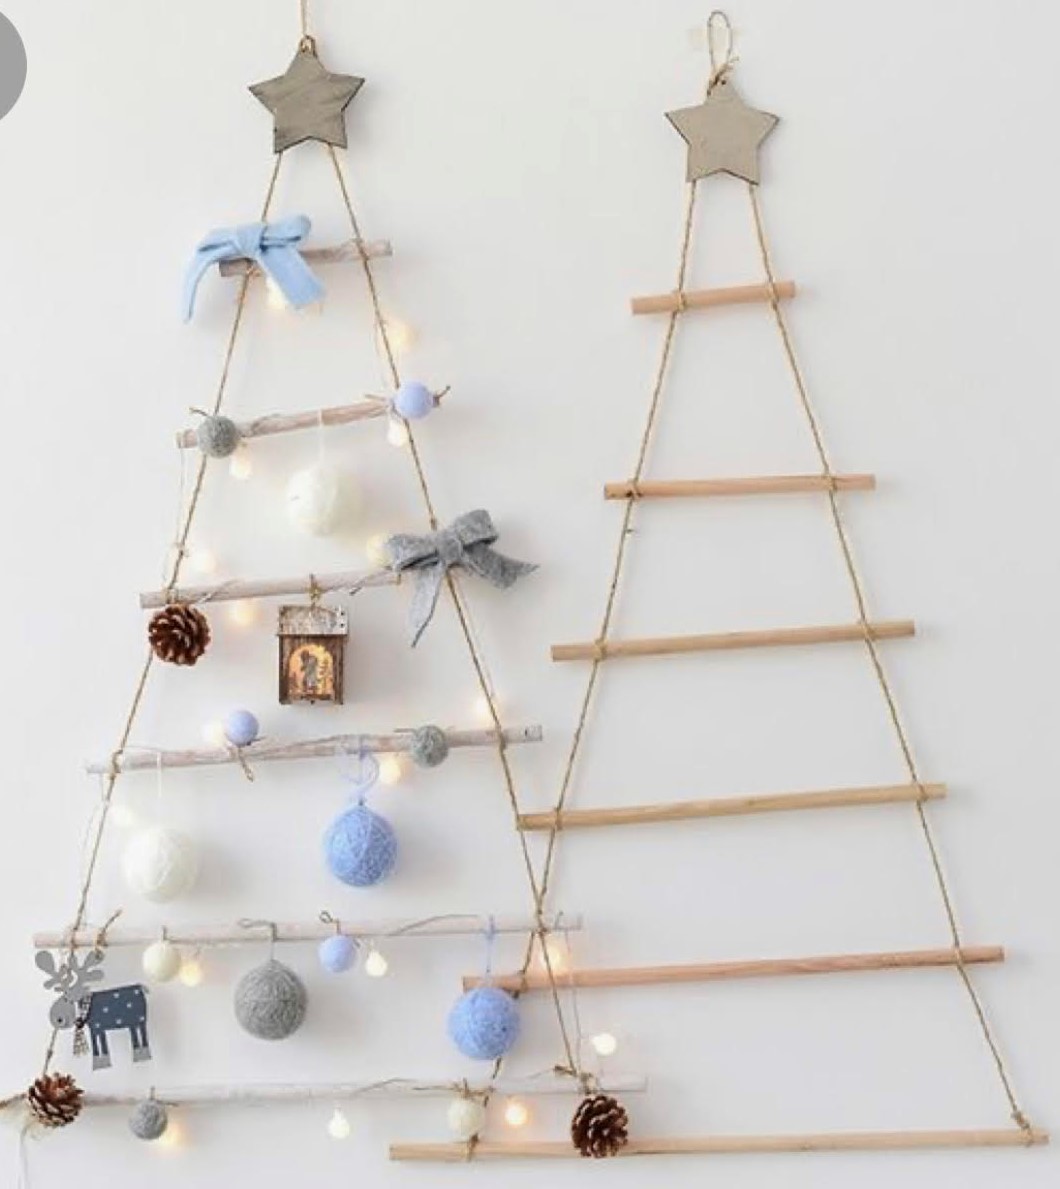 Festive holiday tree craft